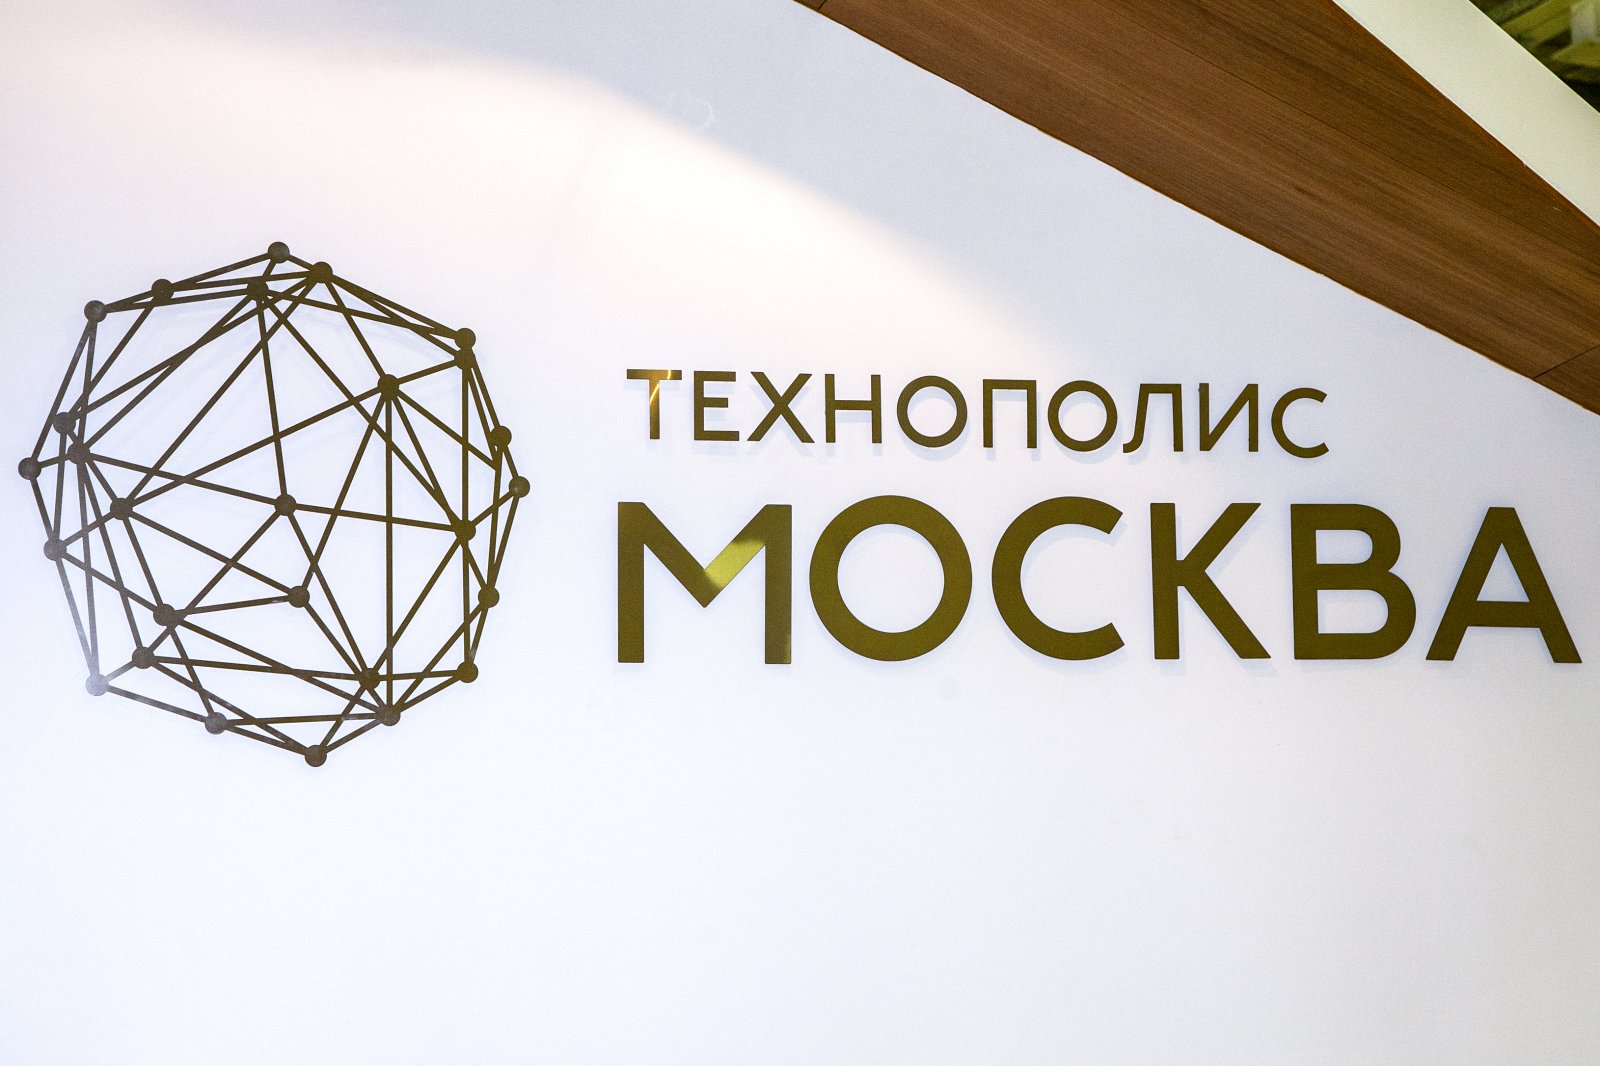 Резиденты ОЭЗ «Технополис “Москва”» сэкономили на налогах почти четыре миллиарда рублей - фото 1